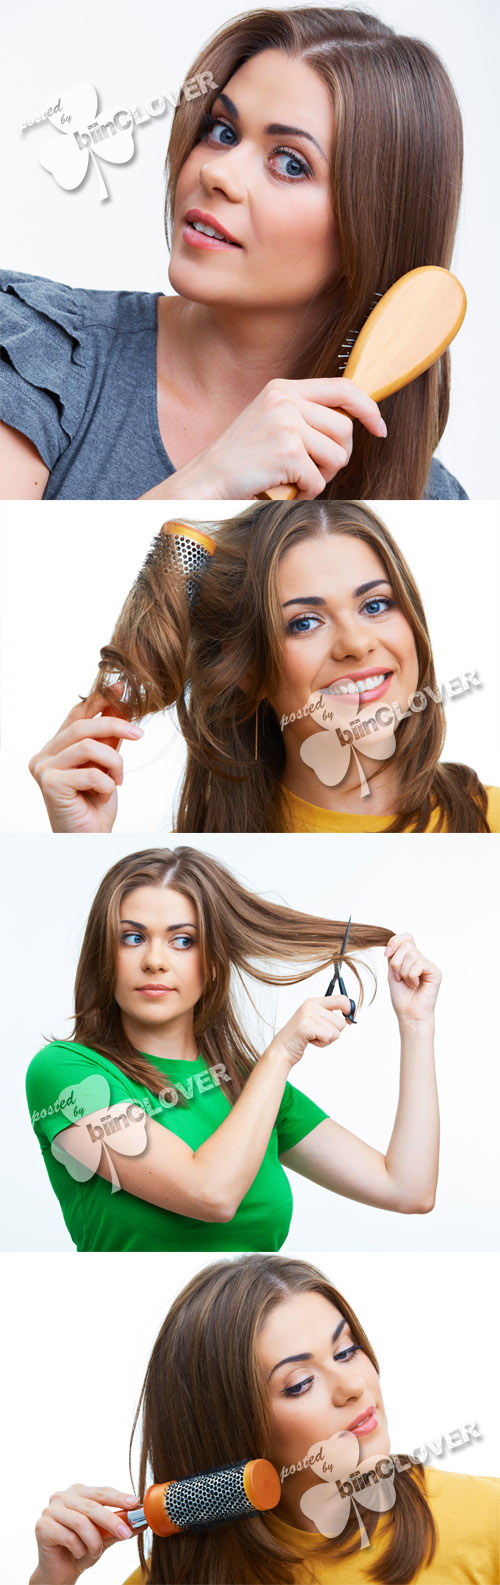 Girl with hairbrush 0400